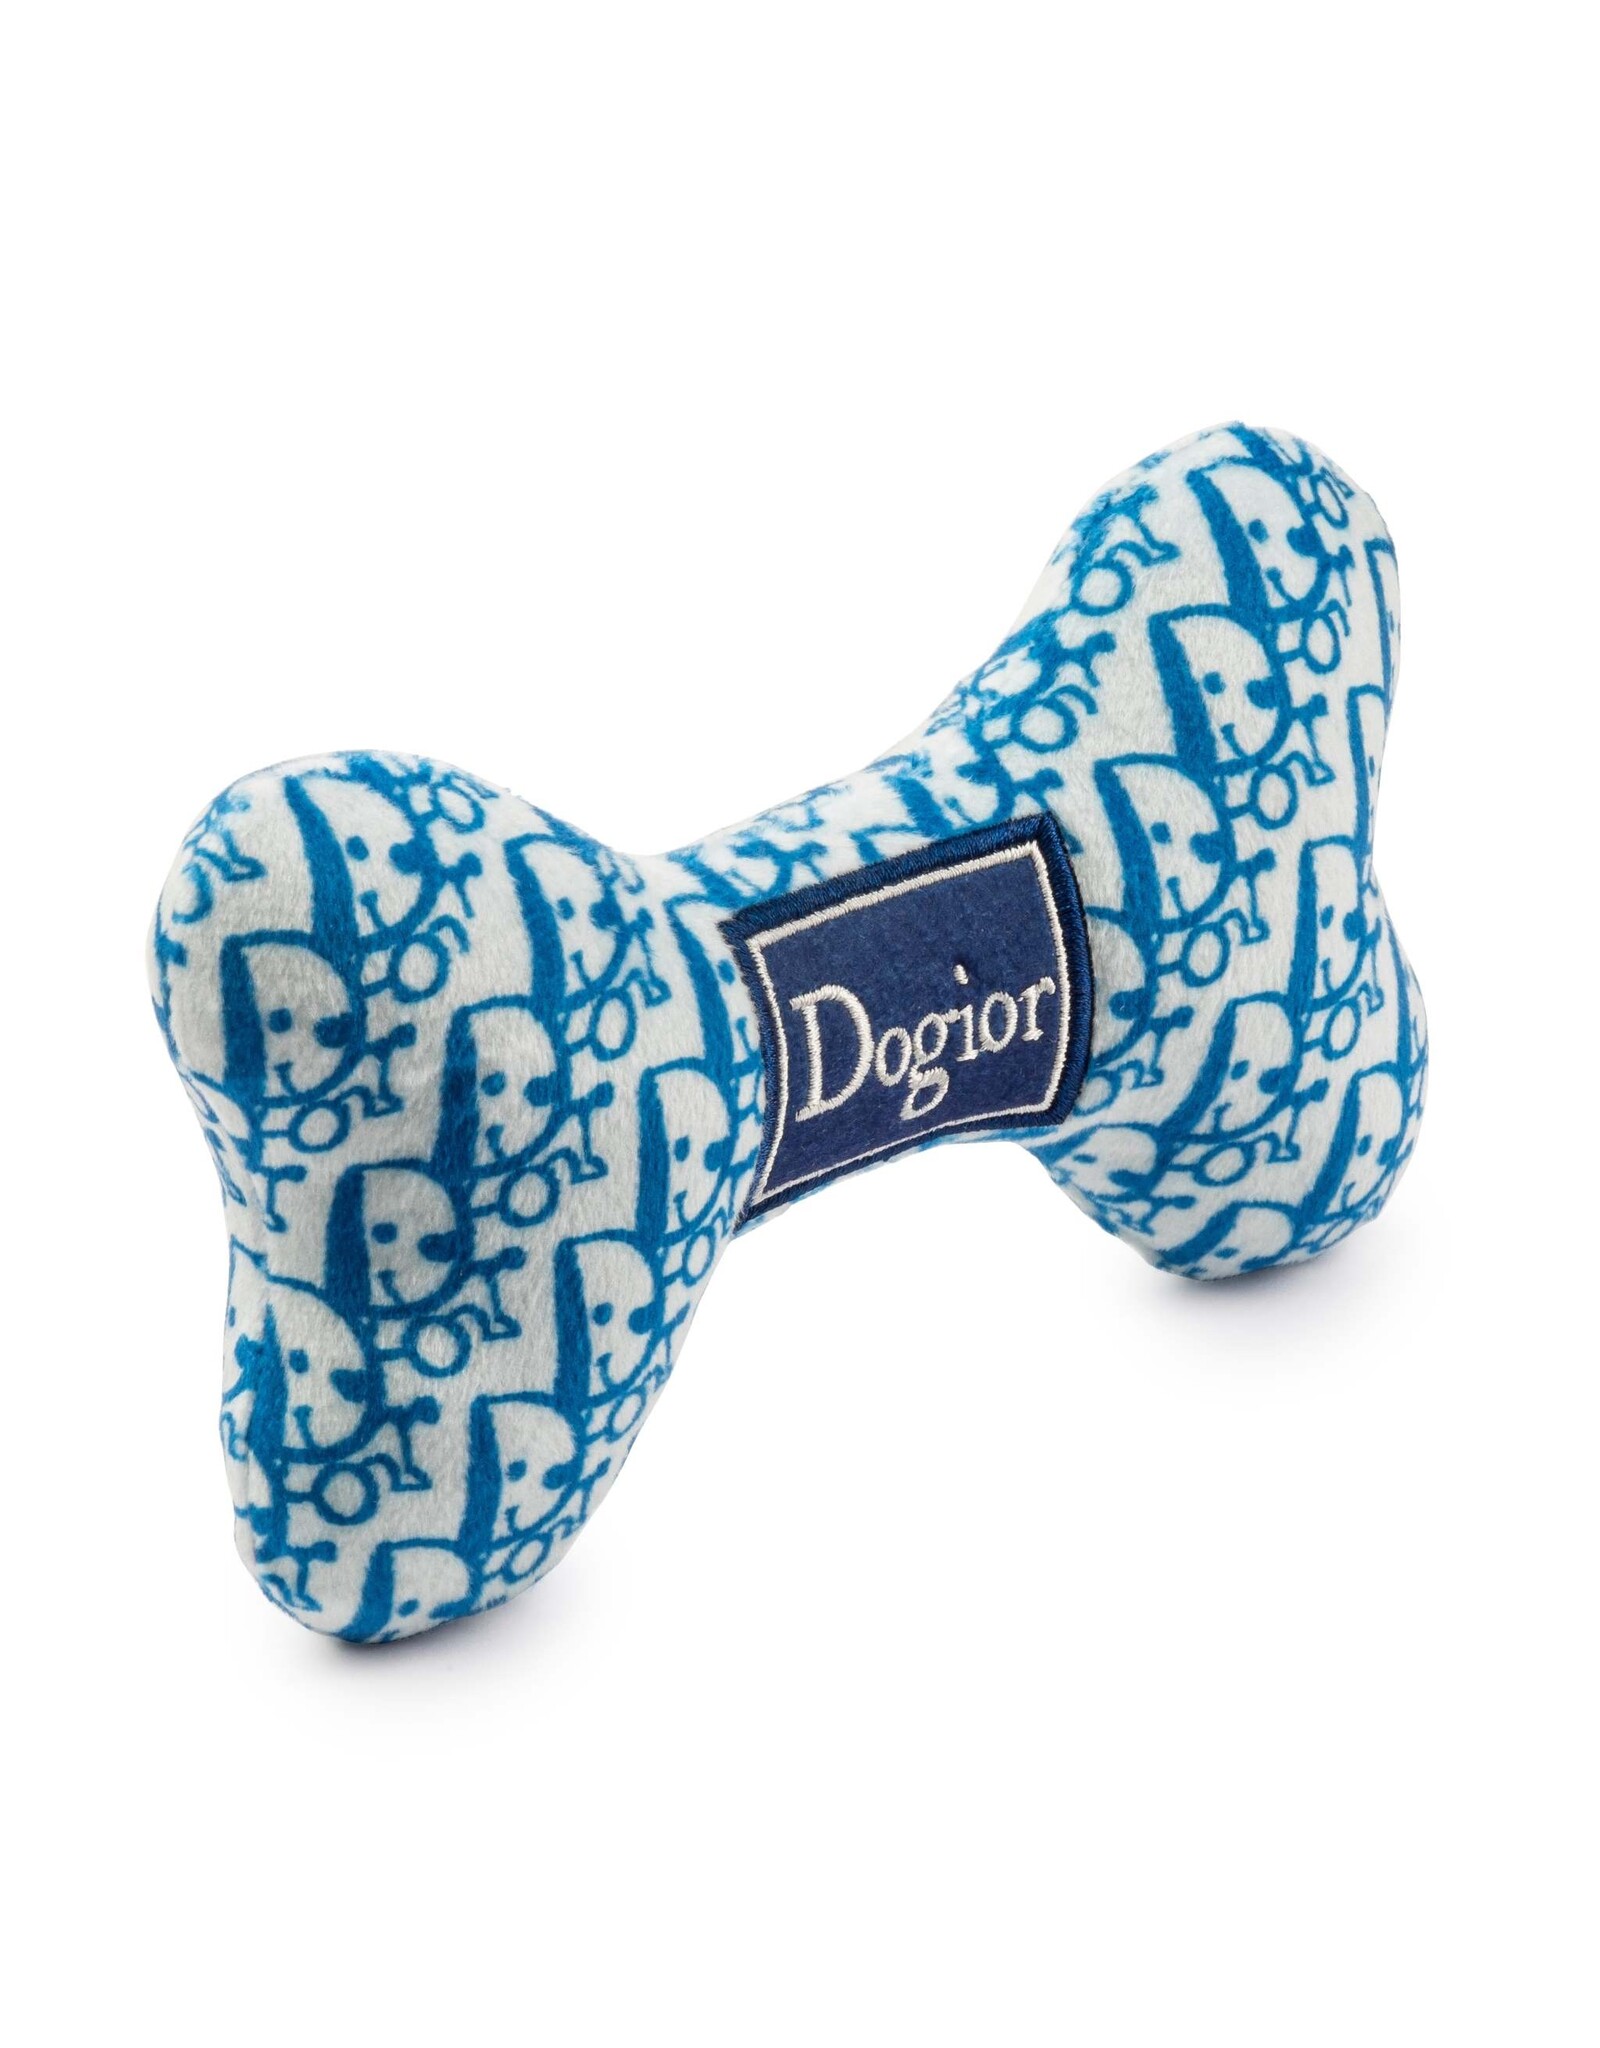 Haute Diggity Dog Dogior Bone Squeaker Dog Toy LG